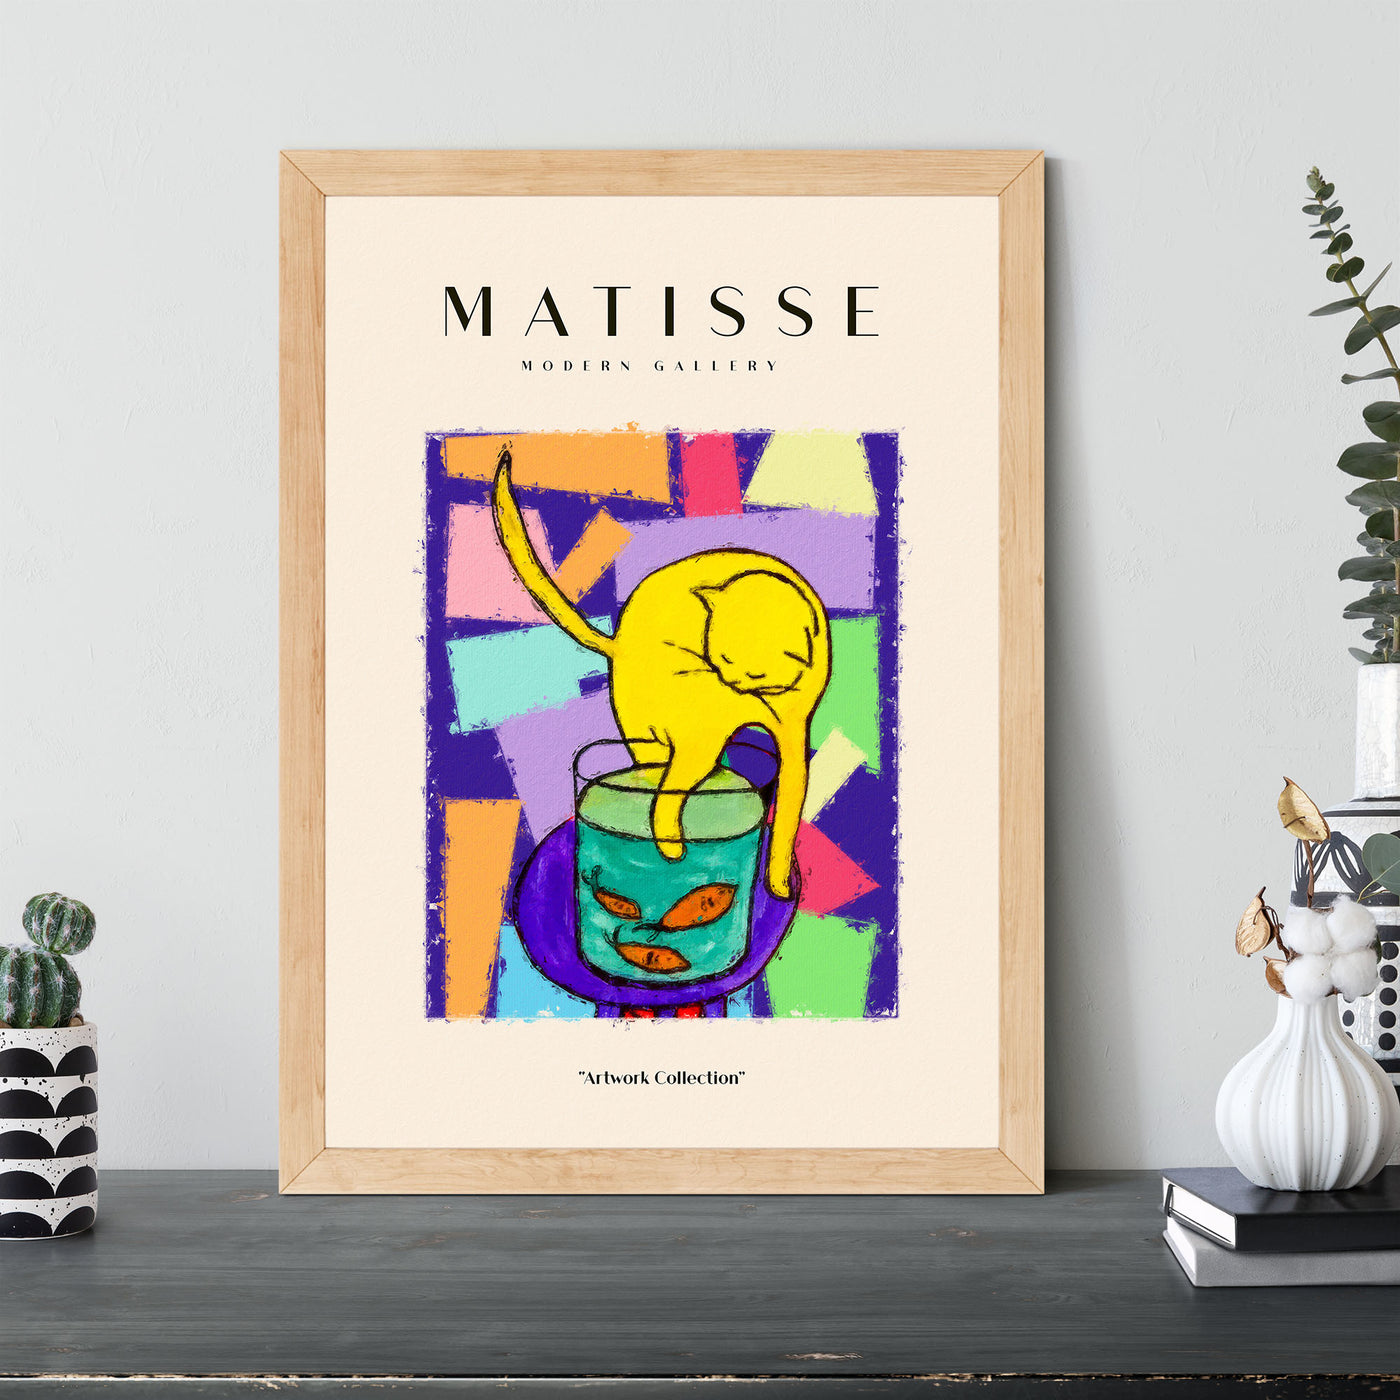 Henri Matisse - #61